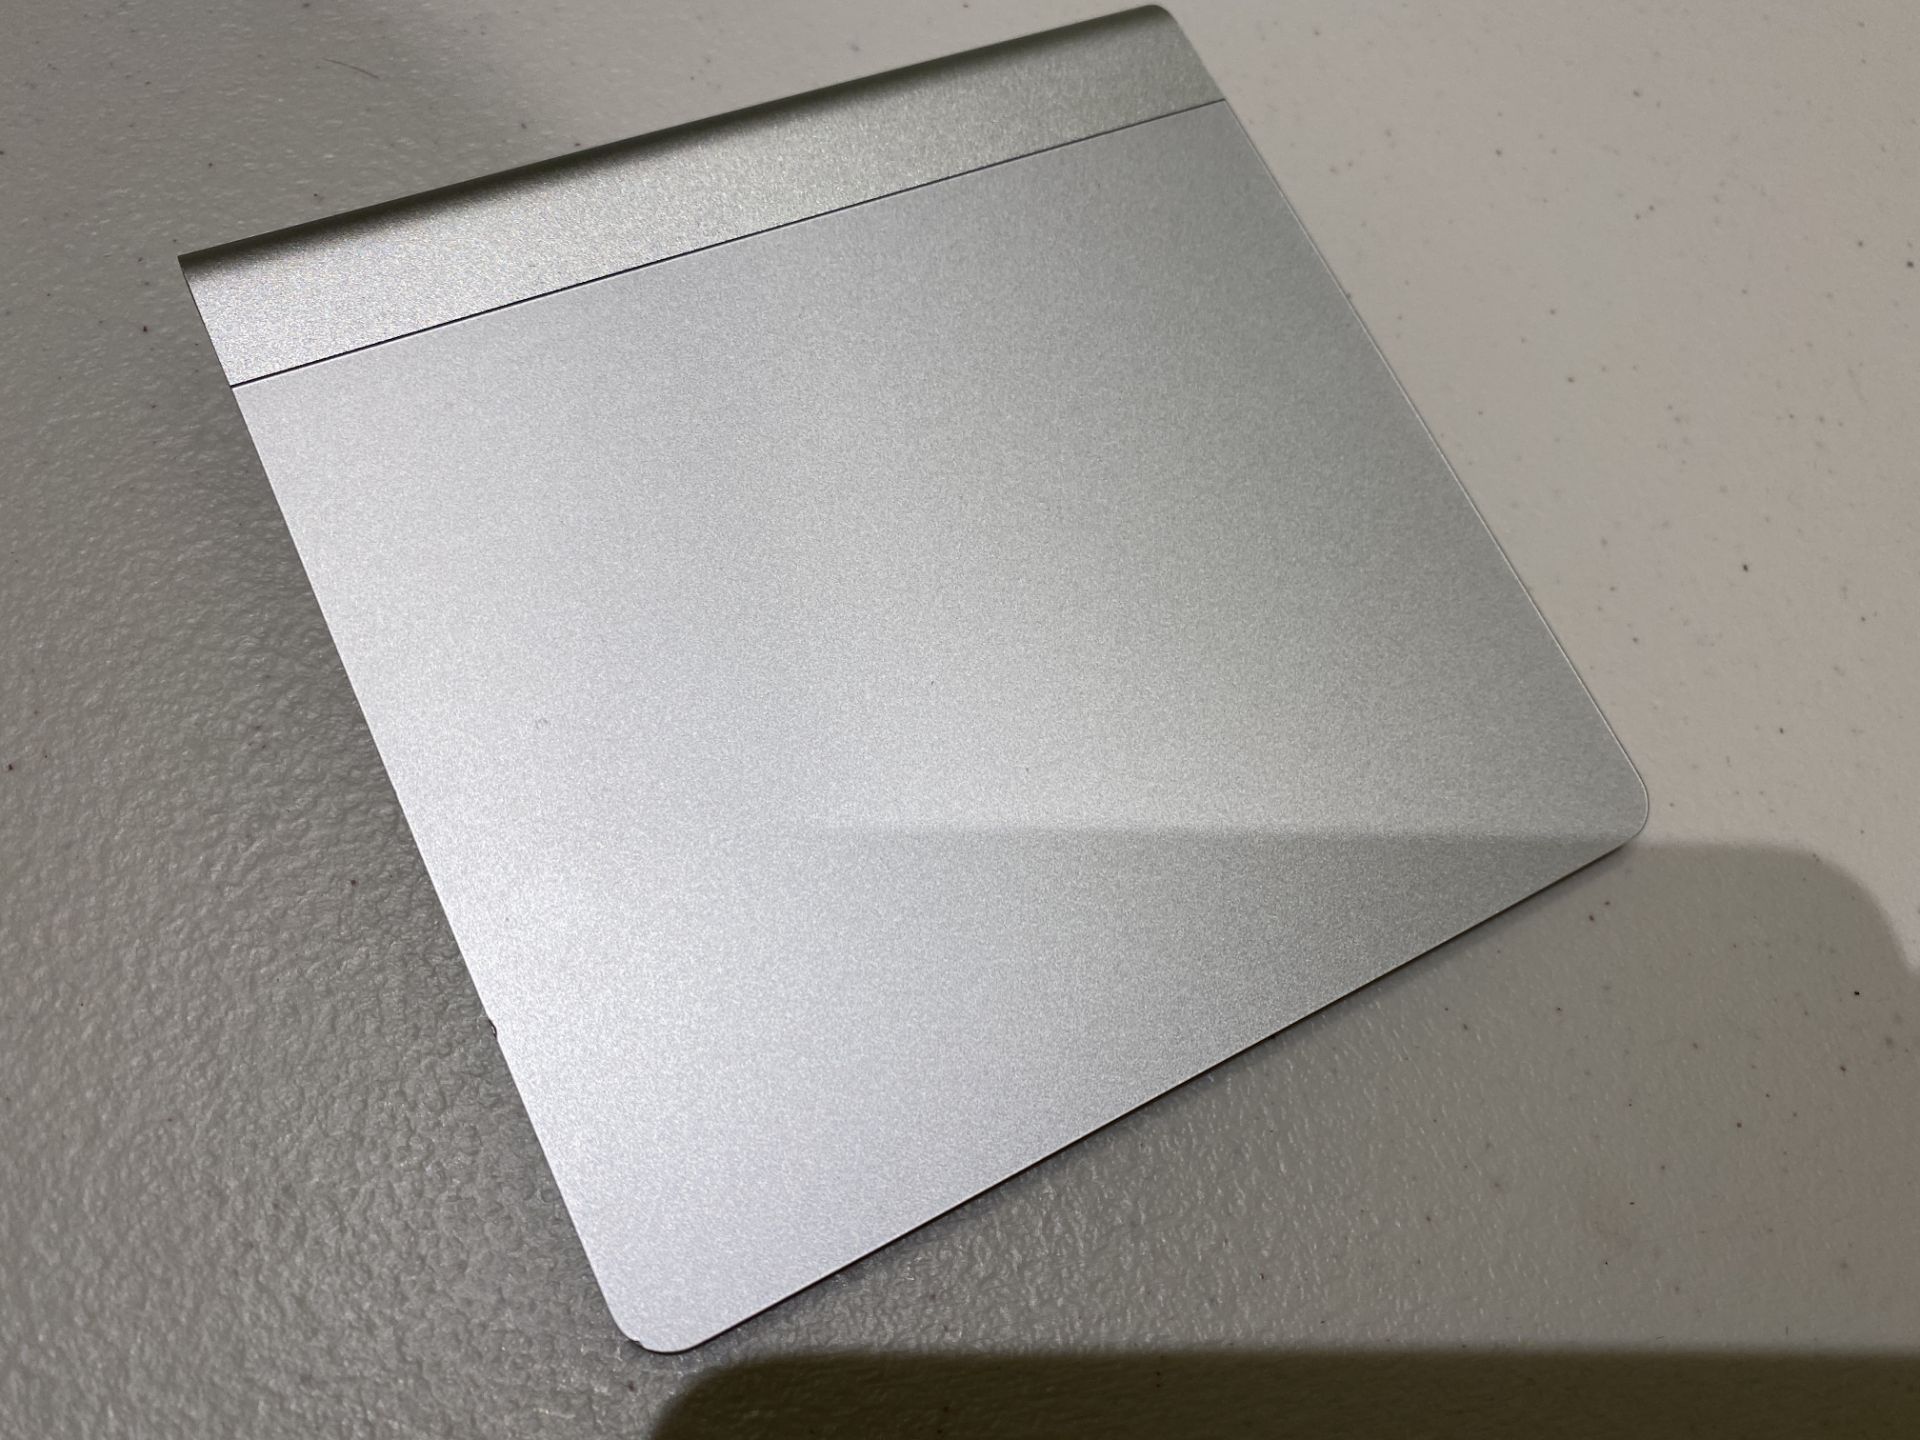 Apple Wireless Multi touch Magic Trackpad, Silver